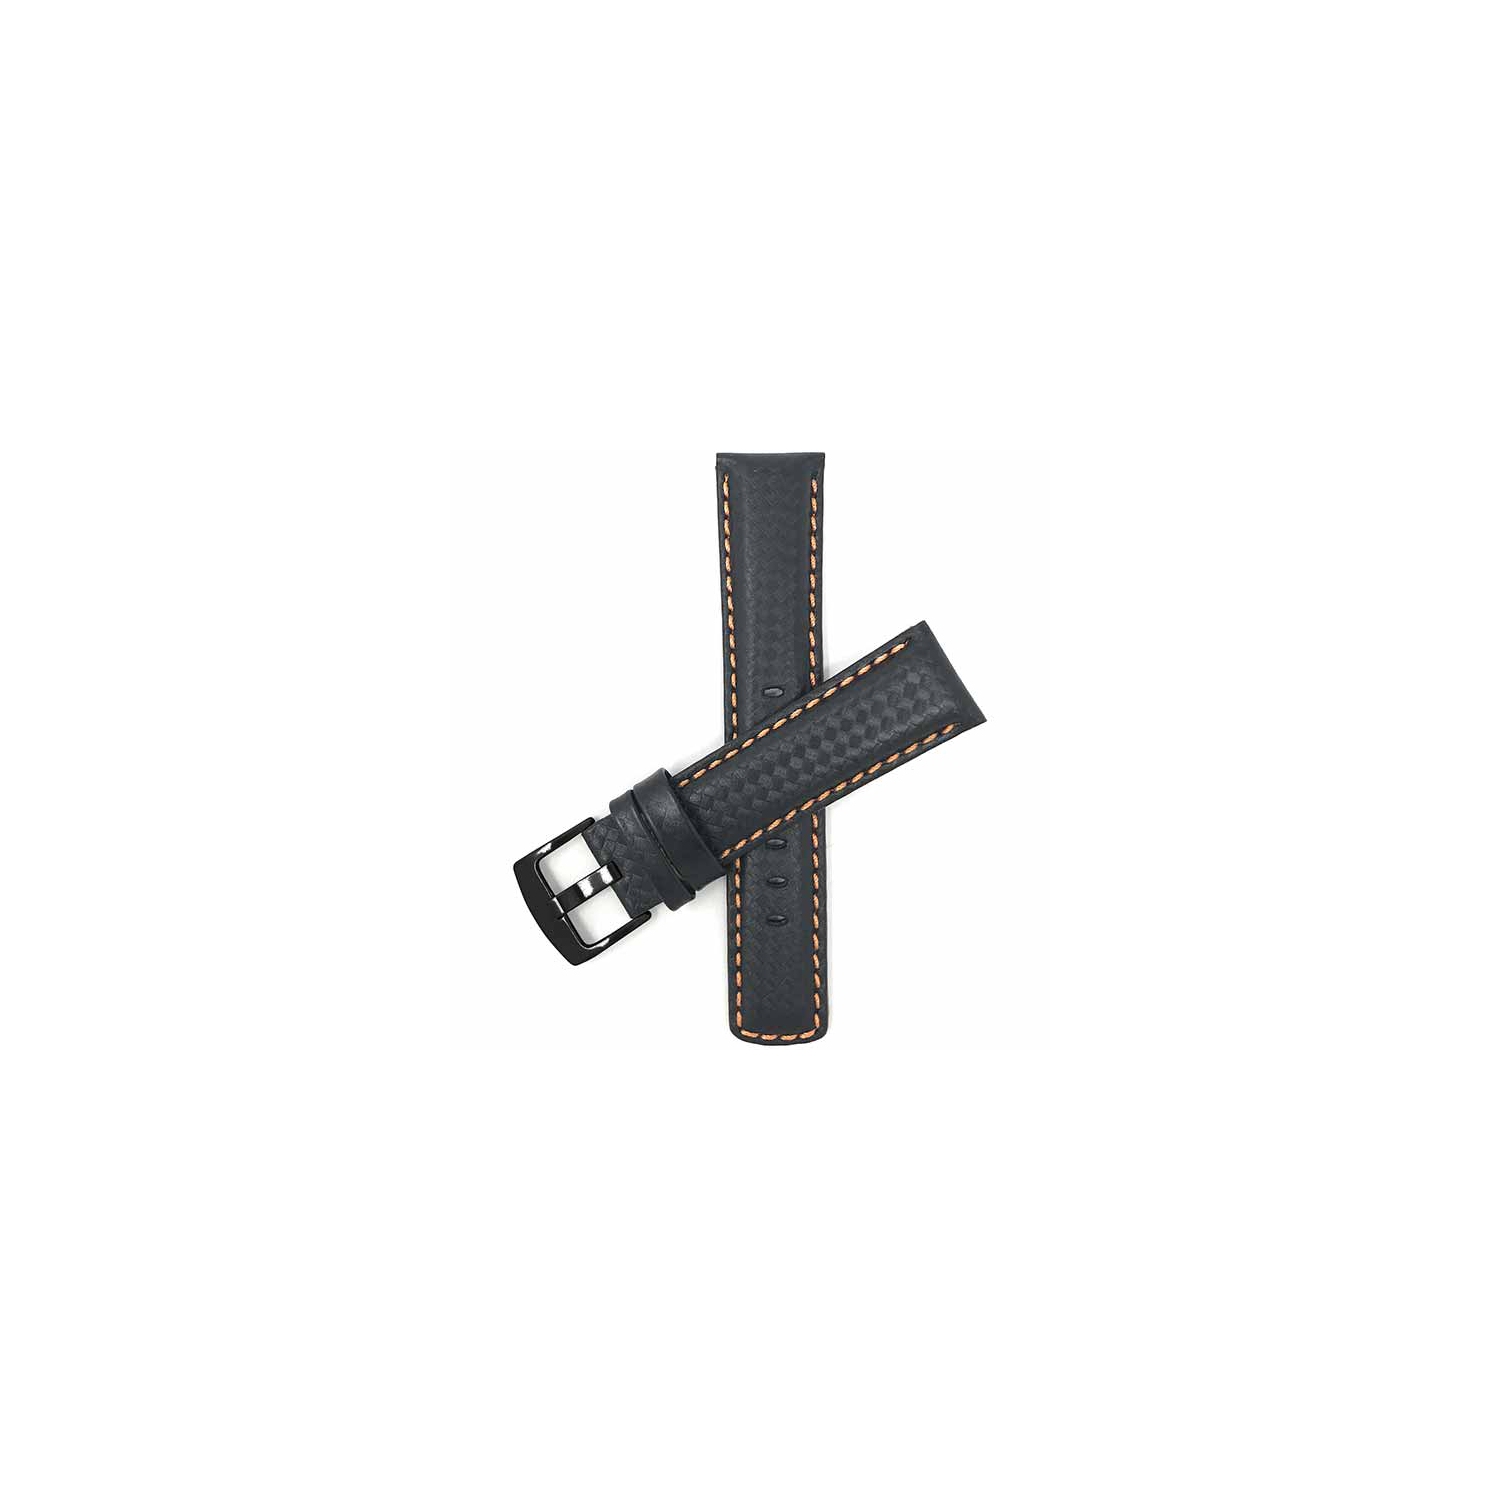 Bandini Mens Leather Carbon Fiber Pattern Smart Watch Band Strap For Garmin Venu Sq - 20mm, Black / Orange / Black Buckle